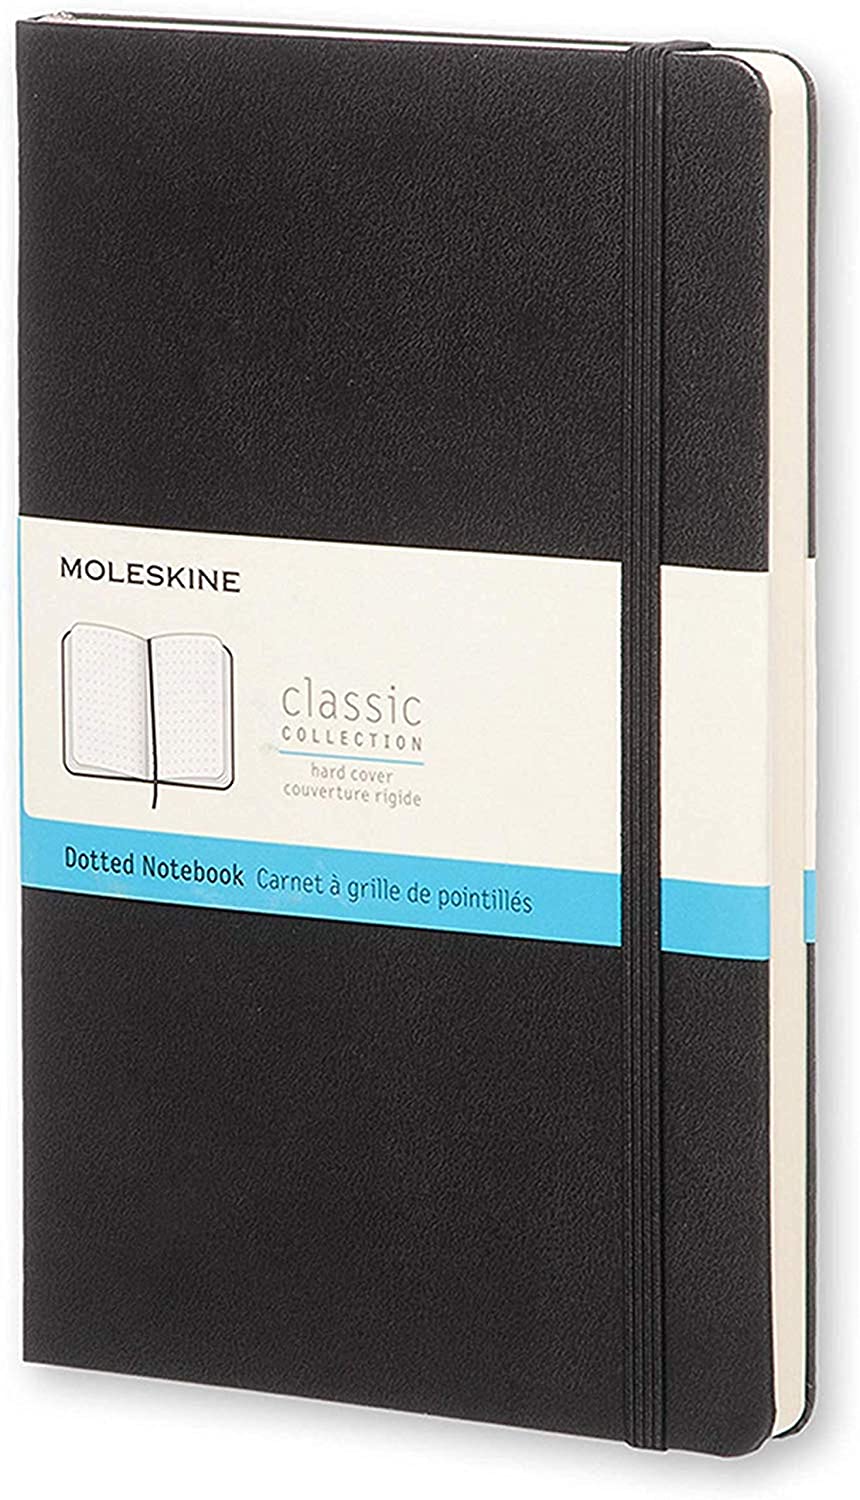 Moleskine Hardcover Notebook - Dotted